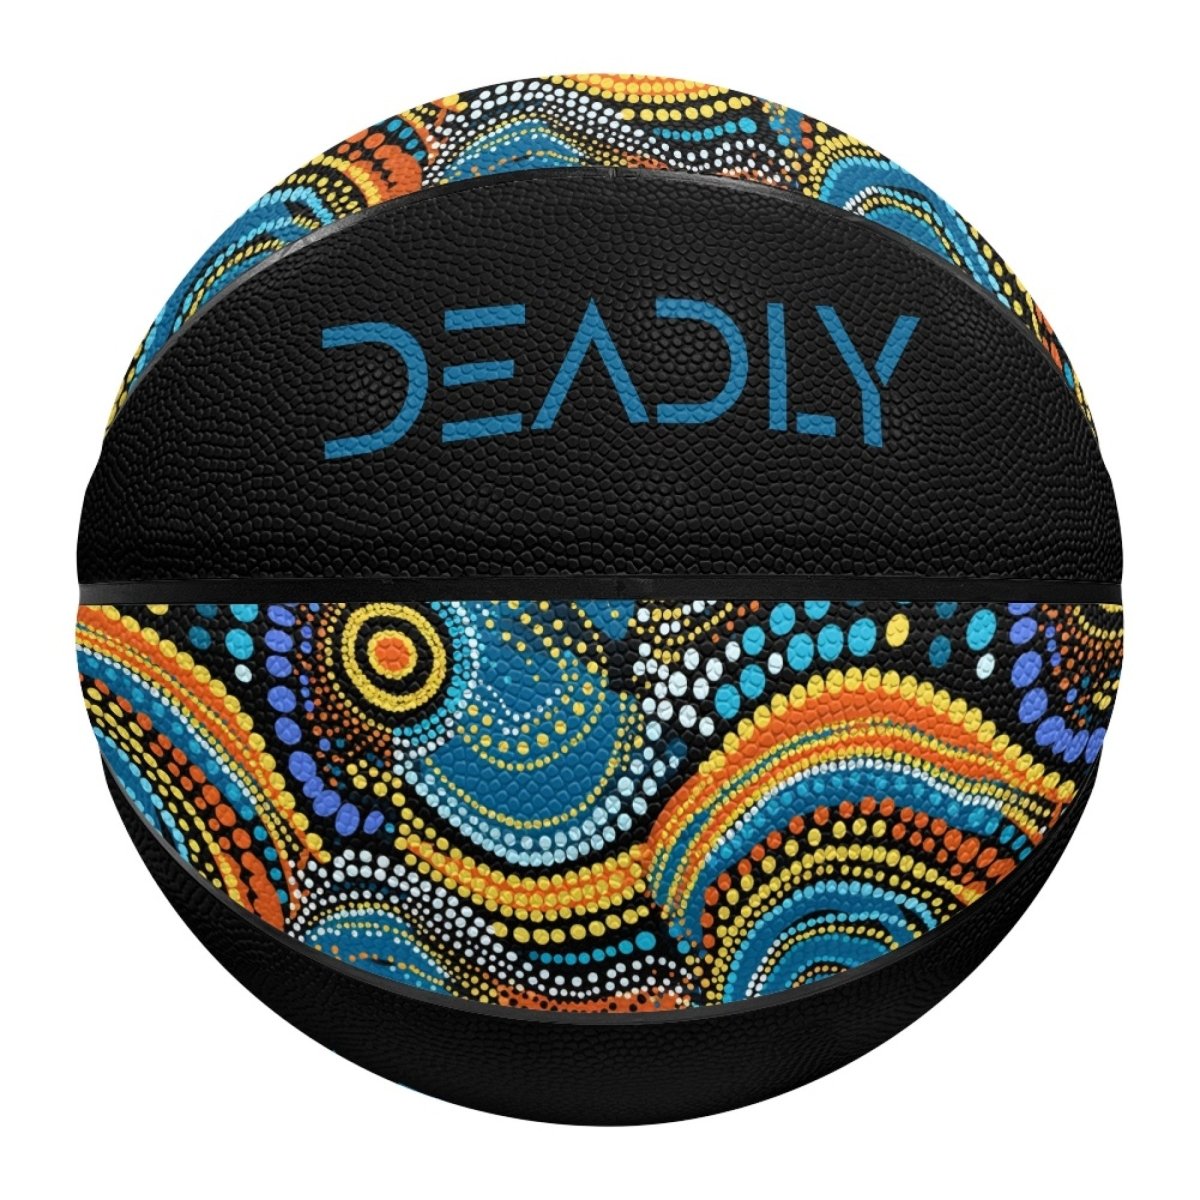 Deadly Aboriginal Basketball - Nesian Kulture